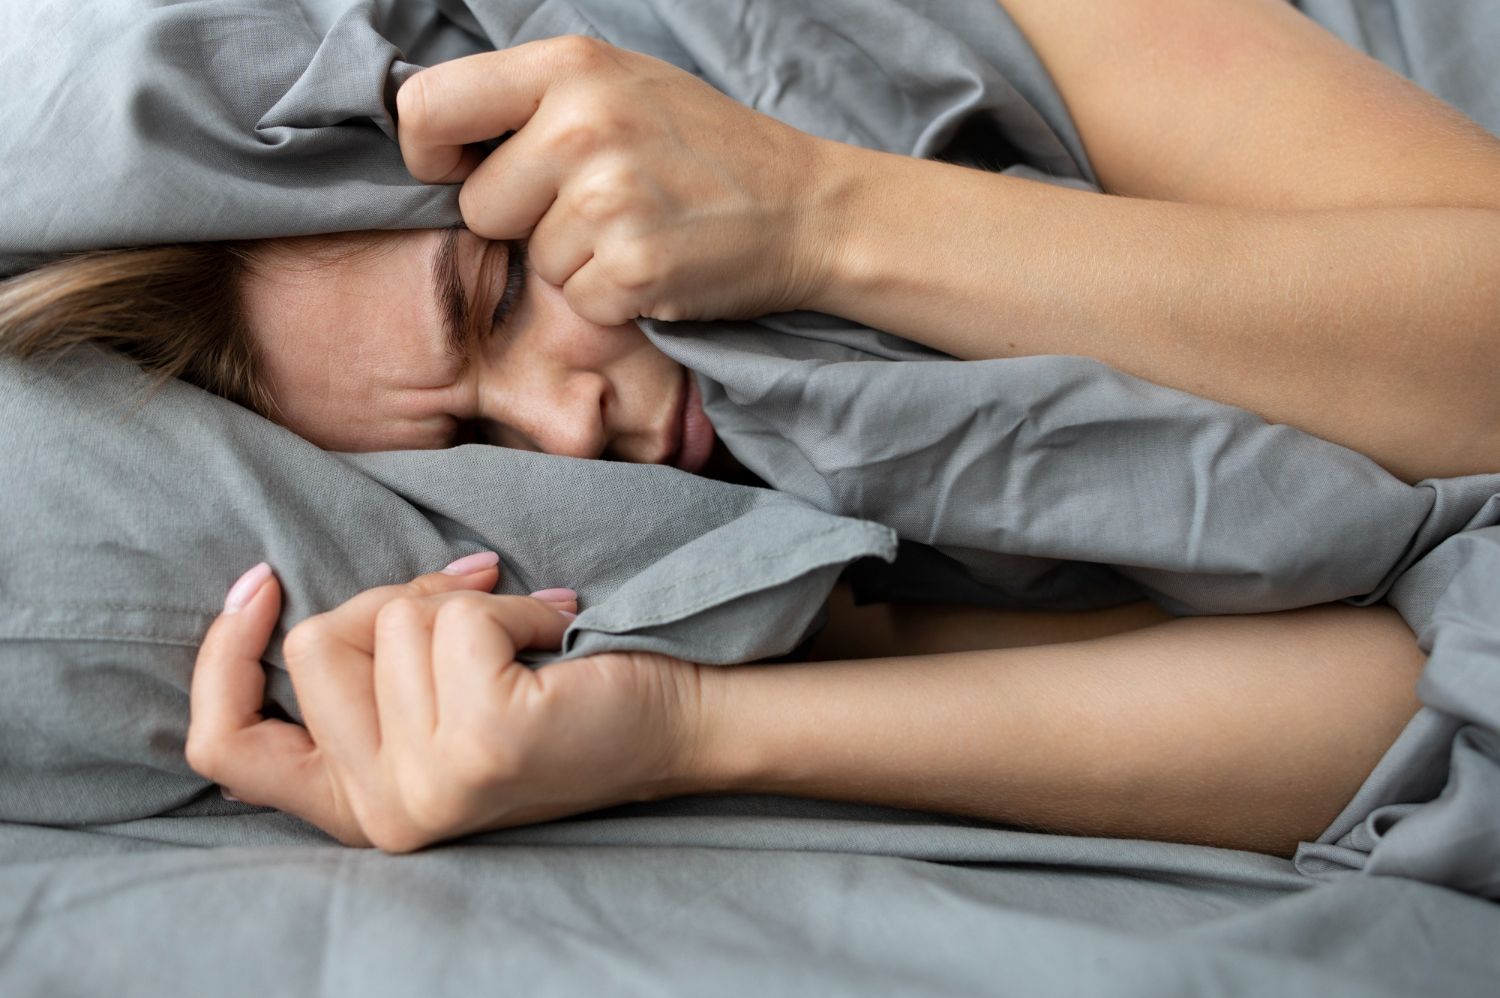 Ilustrasi seorang perempuan yang terganggu tidurnya oleh suara dengkuran suaminya.